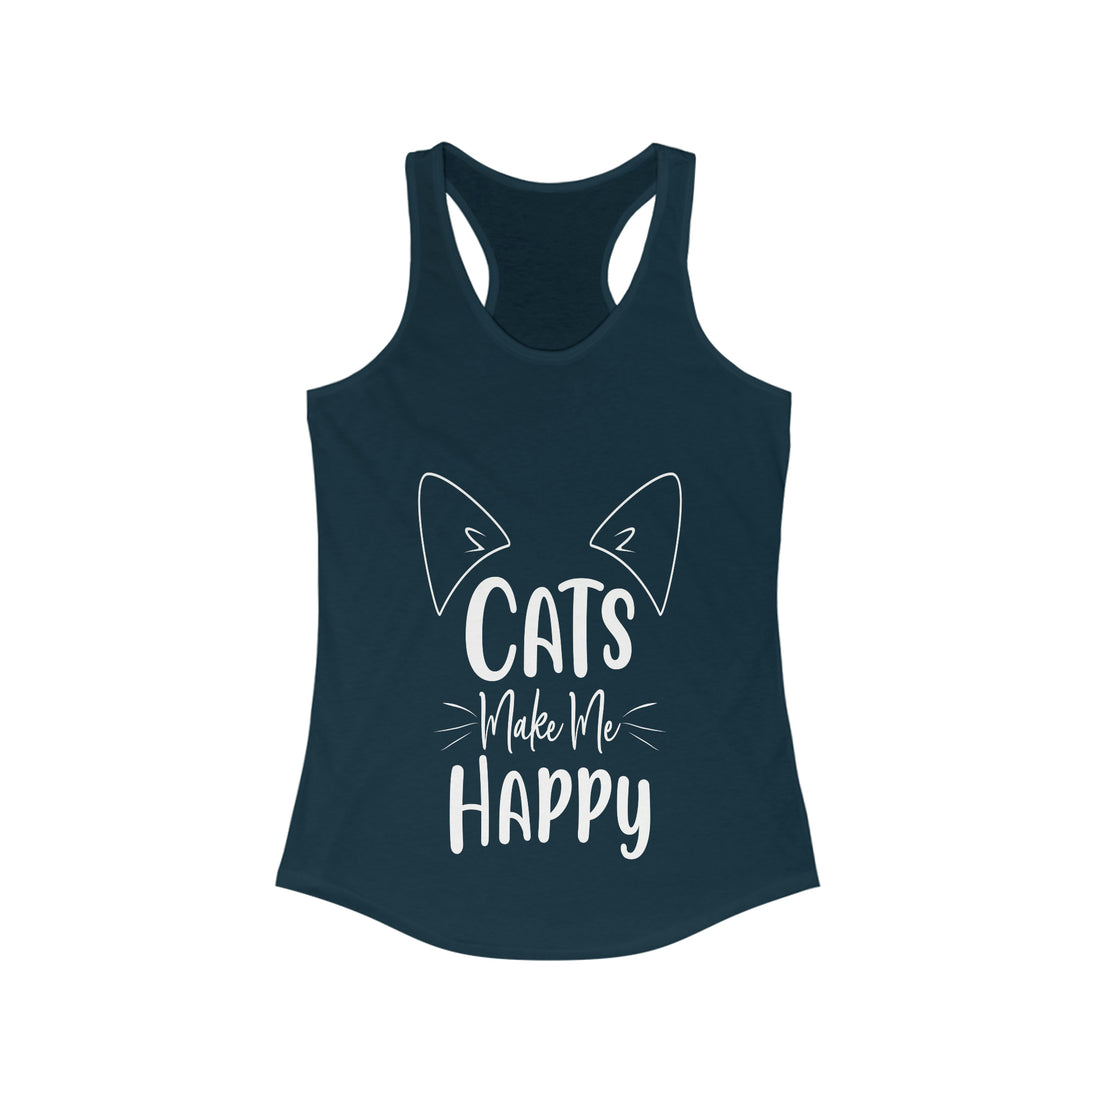 Cats Make Me Happy - Racerback Tank Top